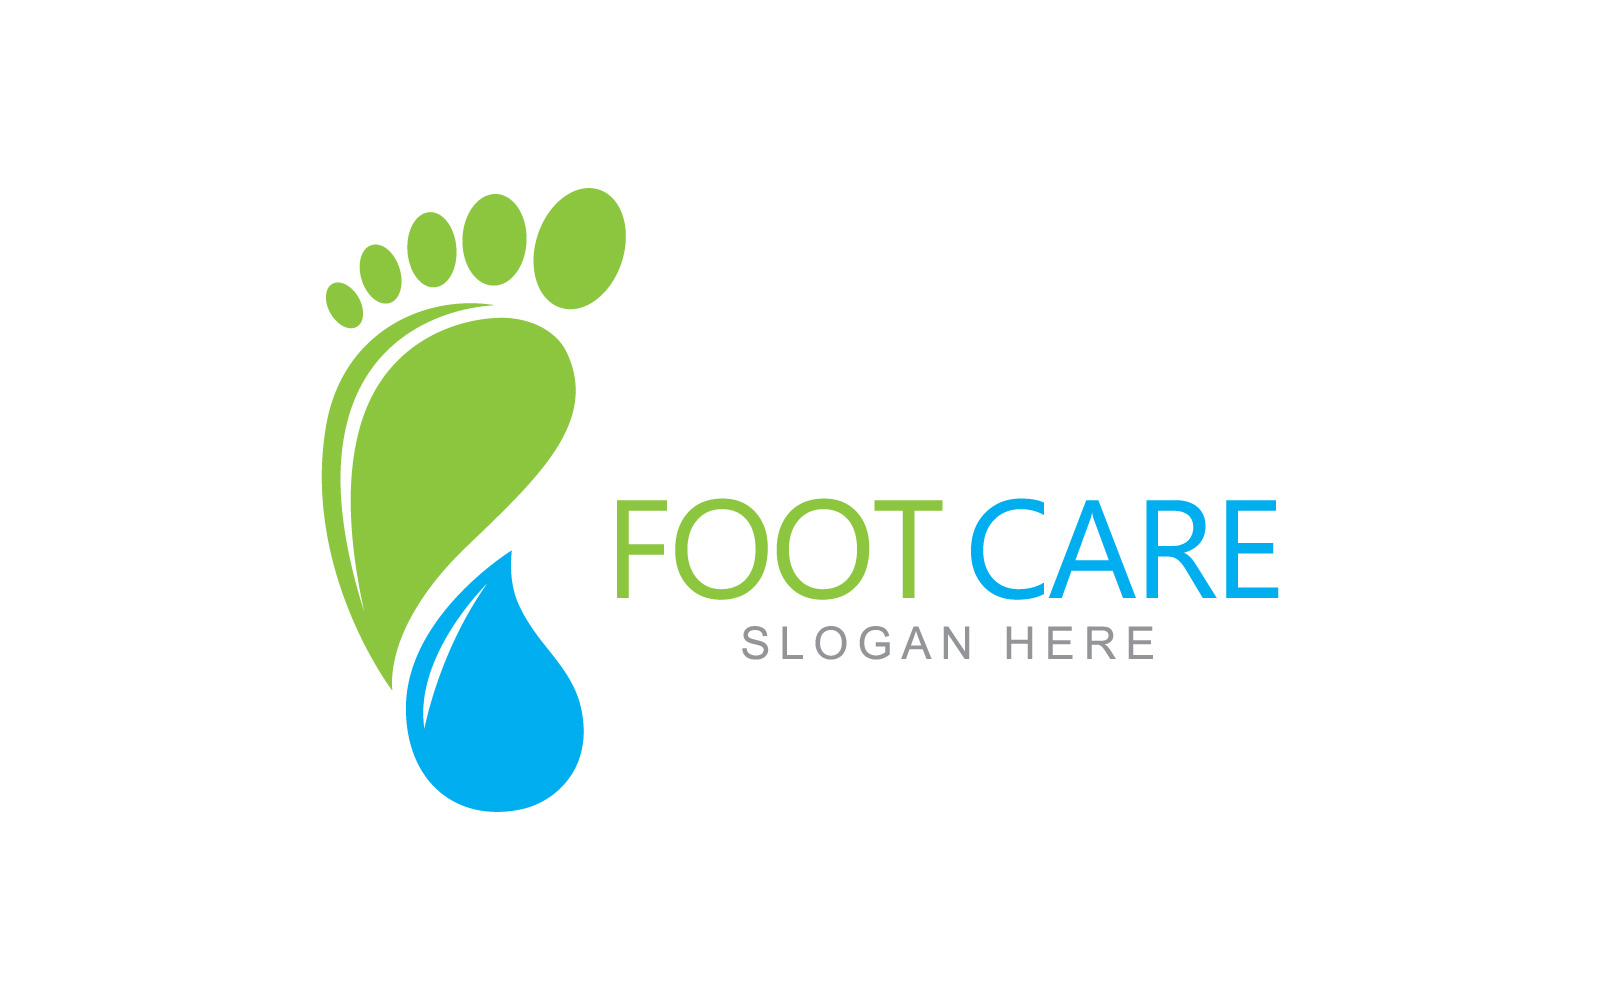 Foot care logo design template V1